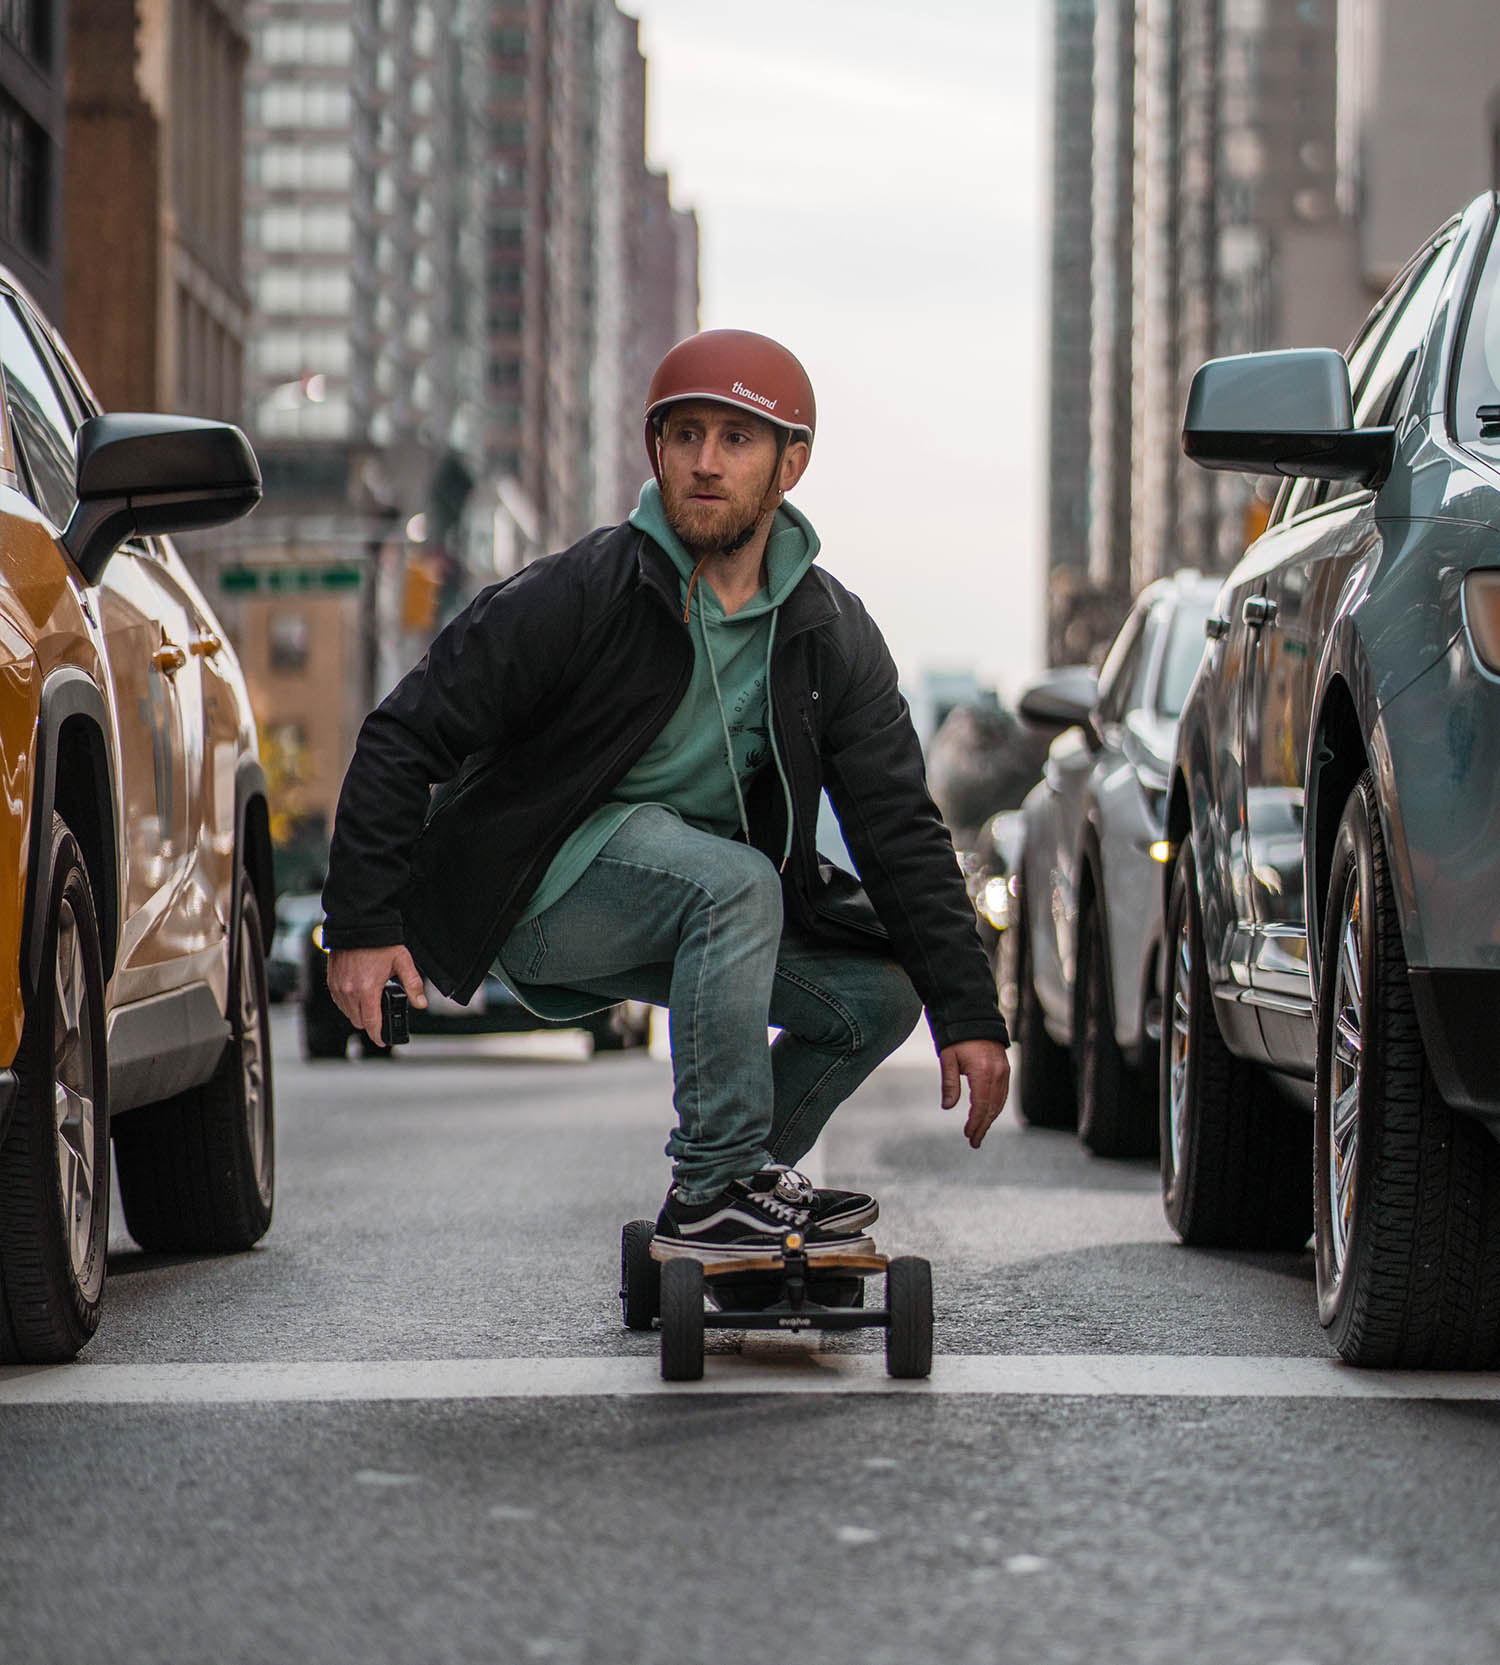 Buy OffRoad Electric Skateboard For All Terrain